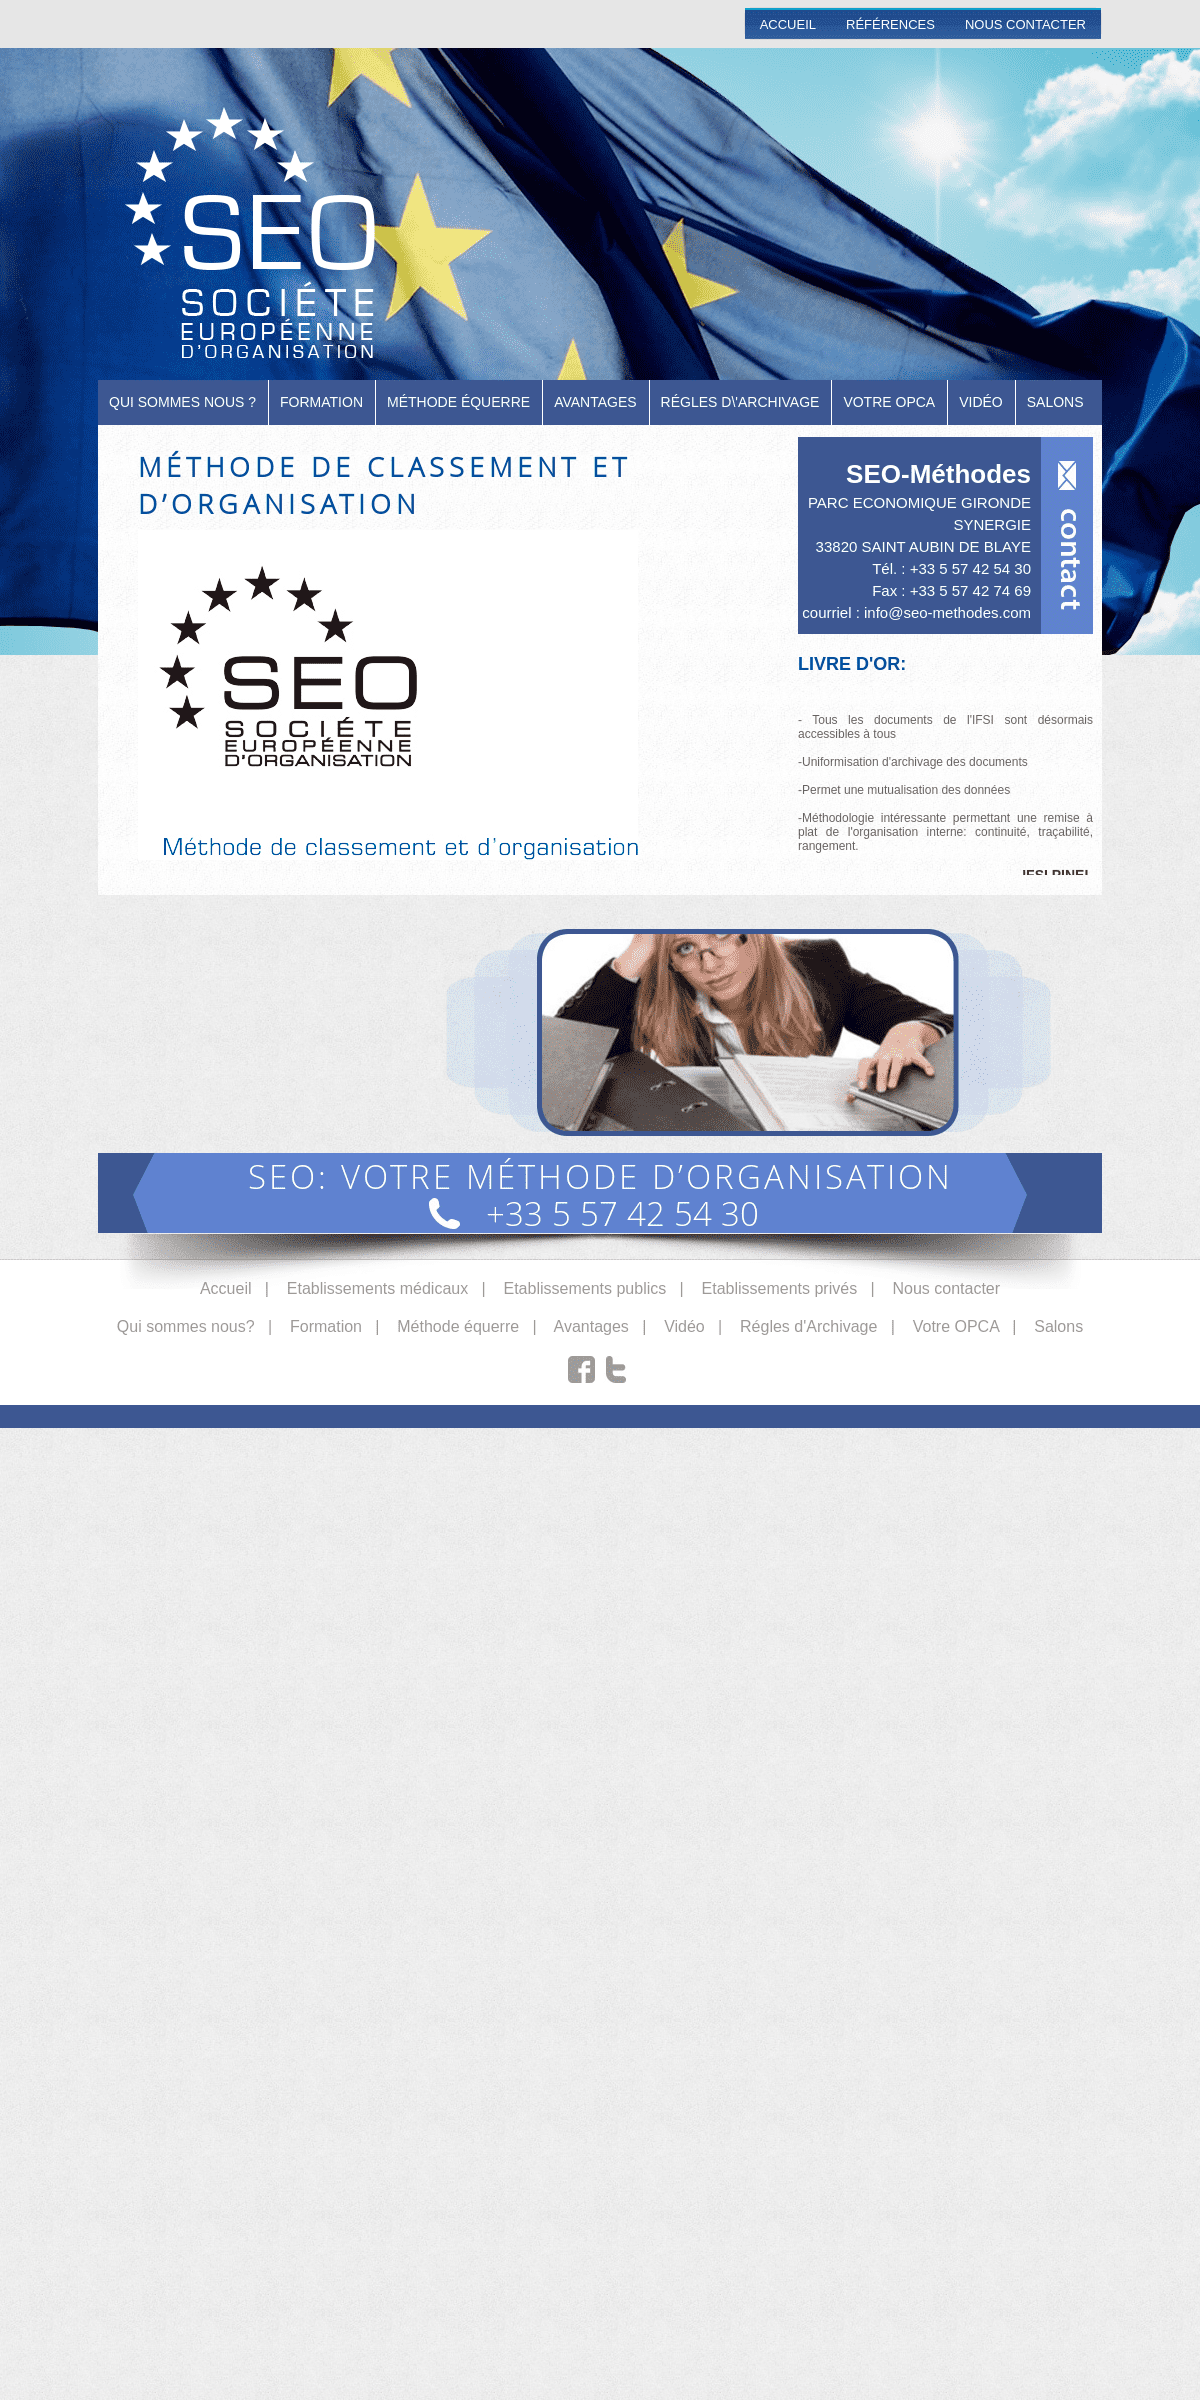 A complete backup of seo-methodes.com